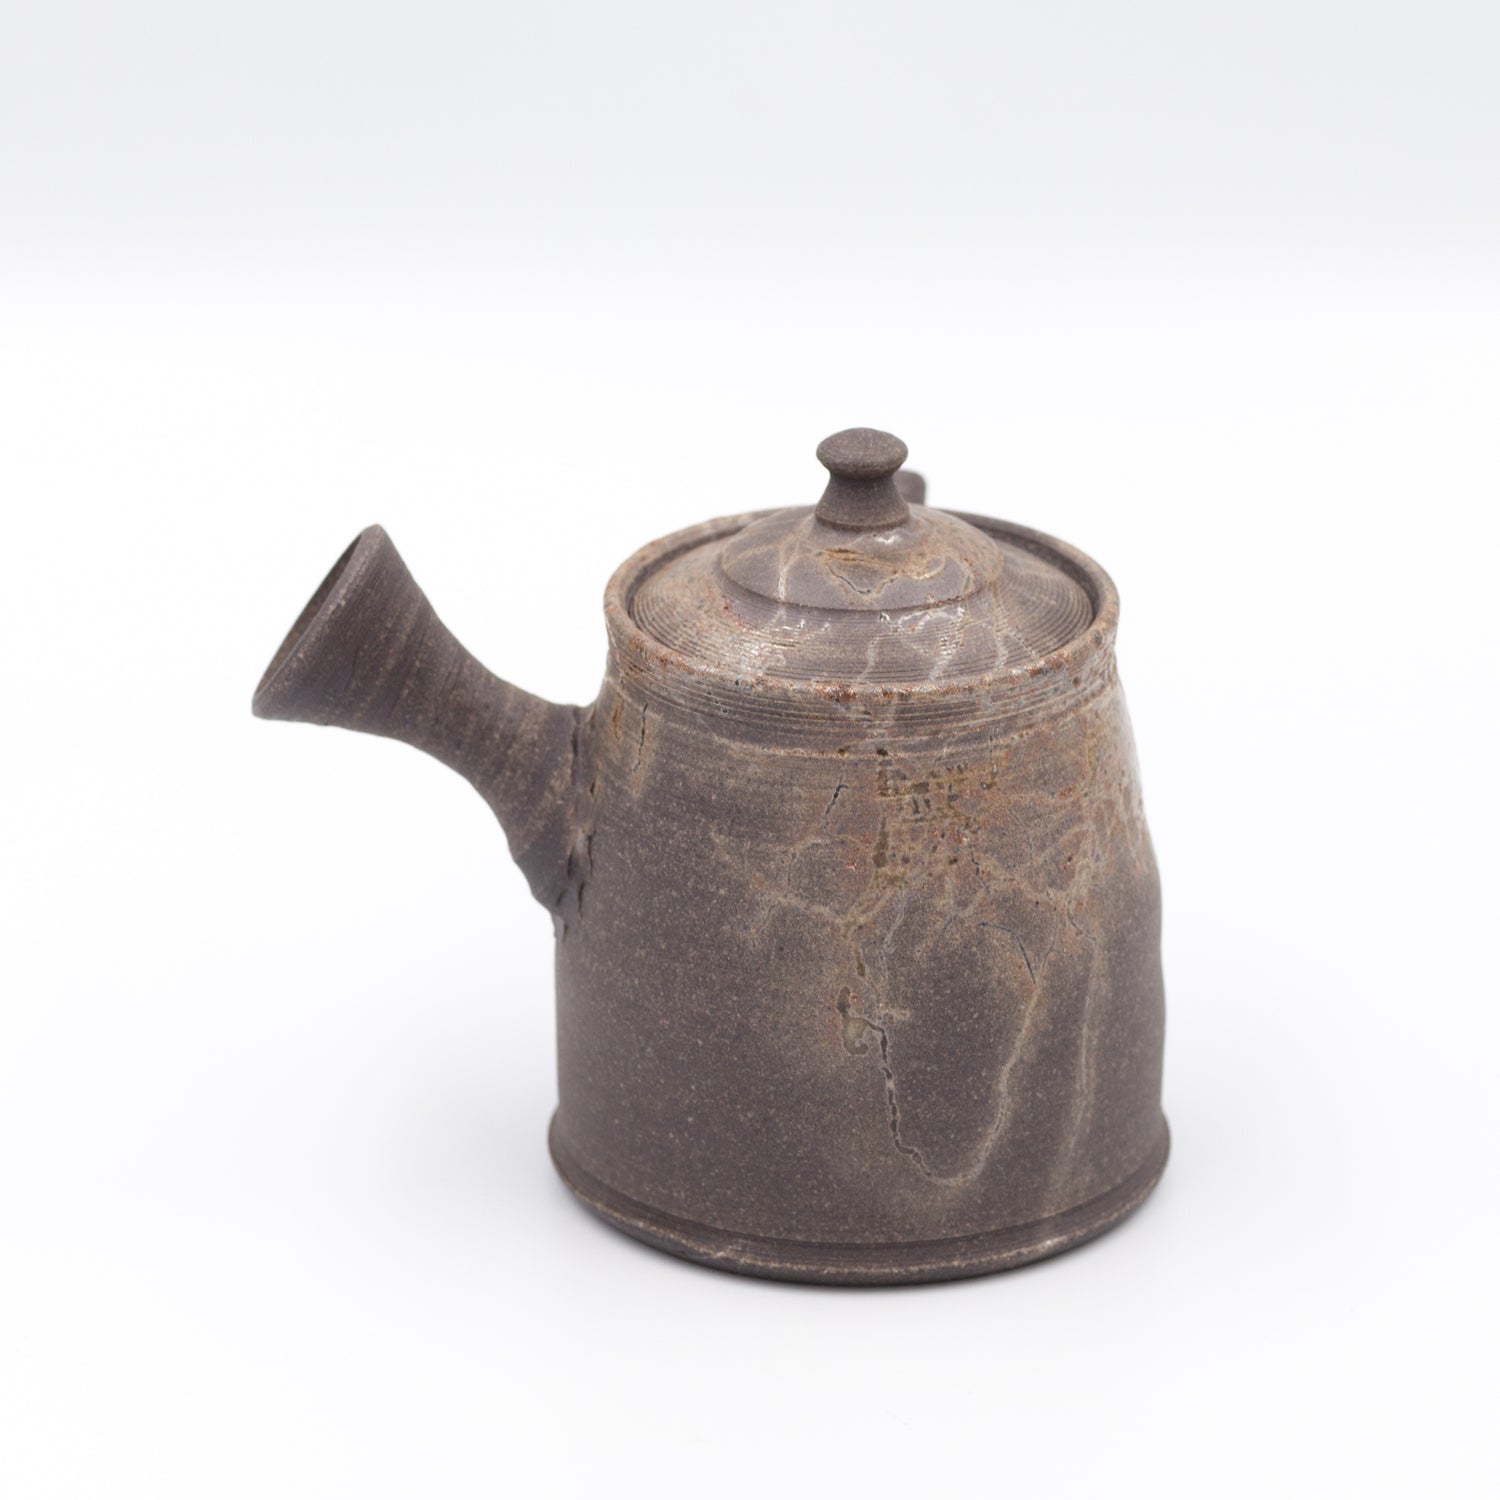 A Tokoname Mogake Kyusu (teapot) by Gafu Ito. 伊藤雅風　常滑　藻掛　急須